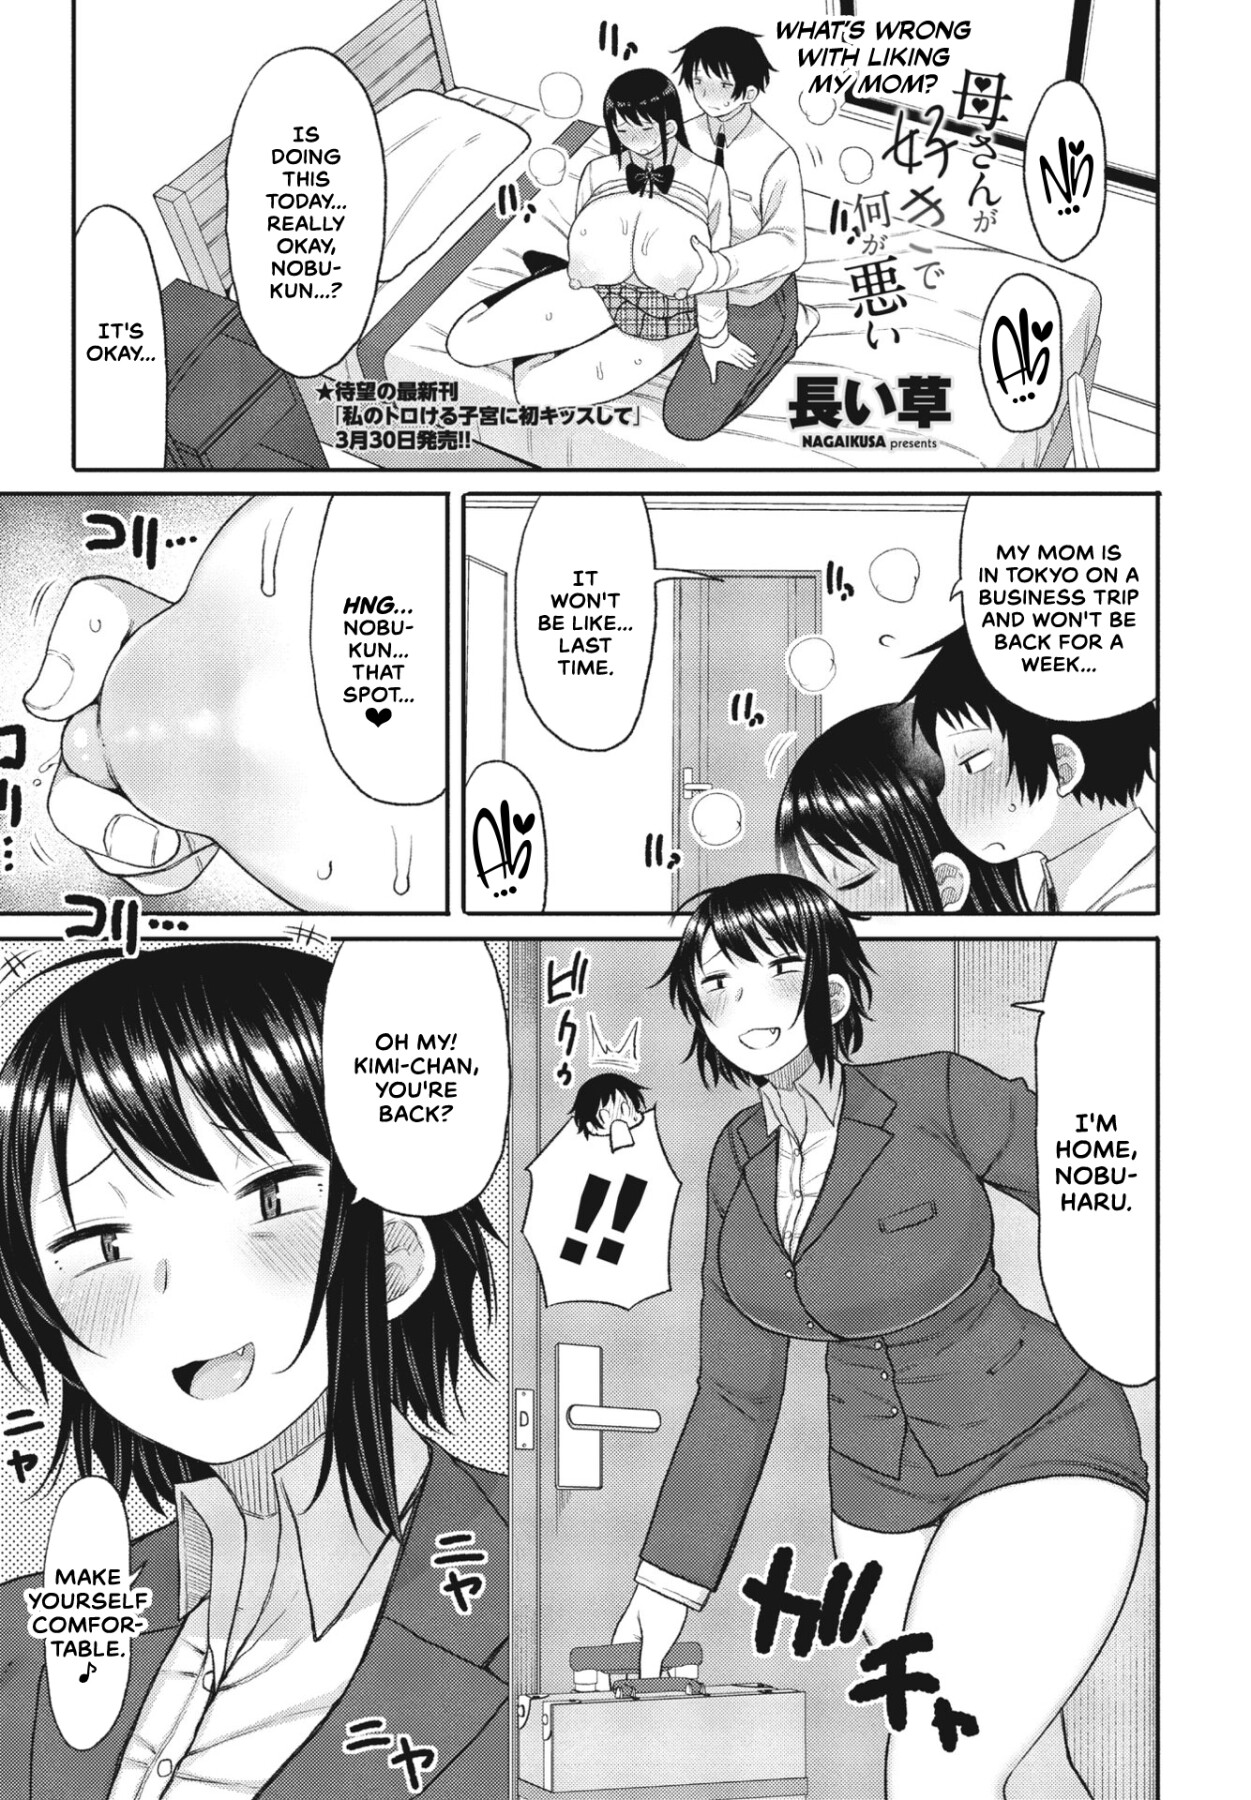 Hentai Manga Comic-What's Wrong With Liking My Mom?-Read-1